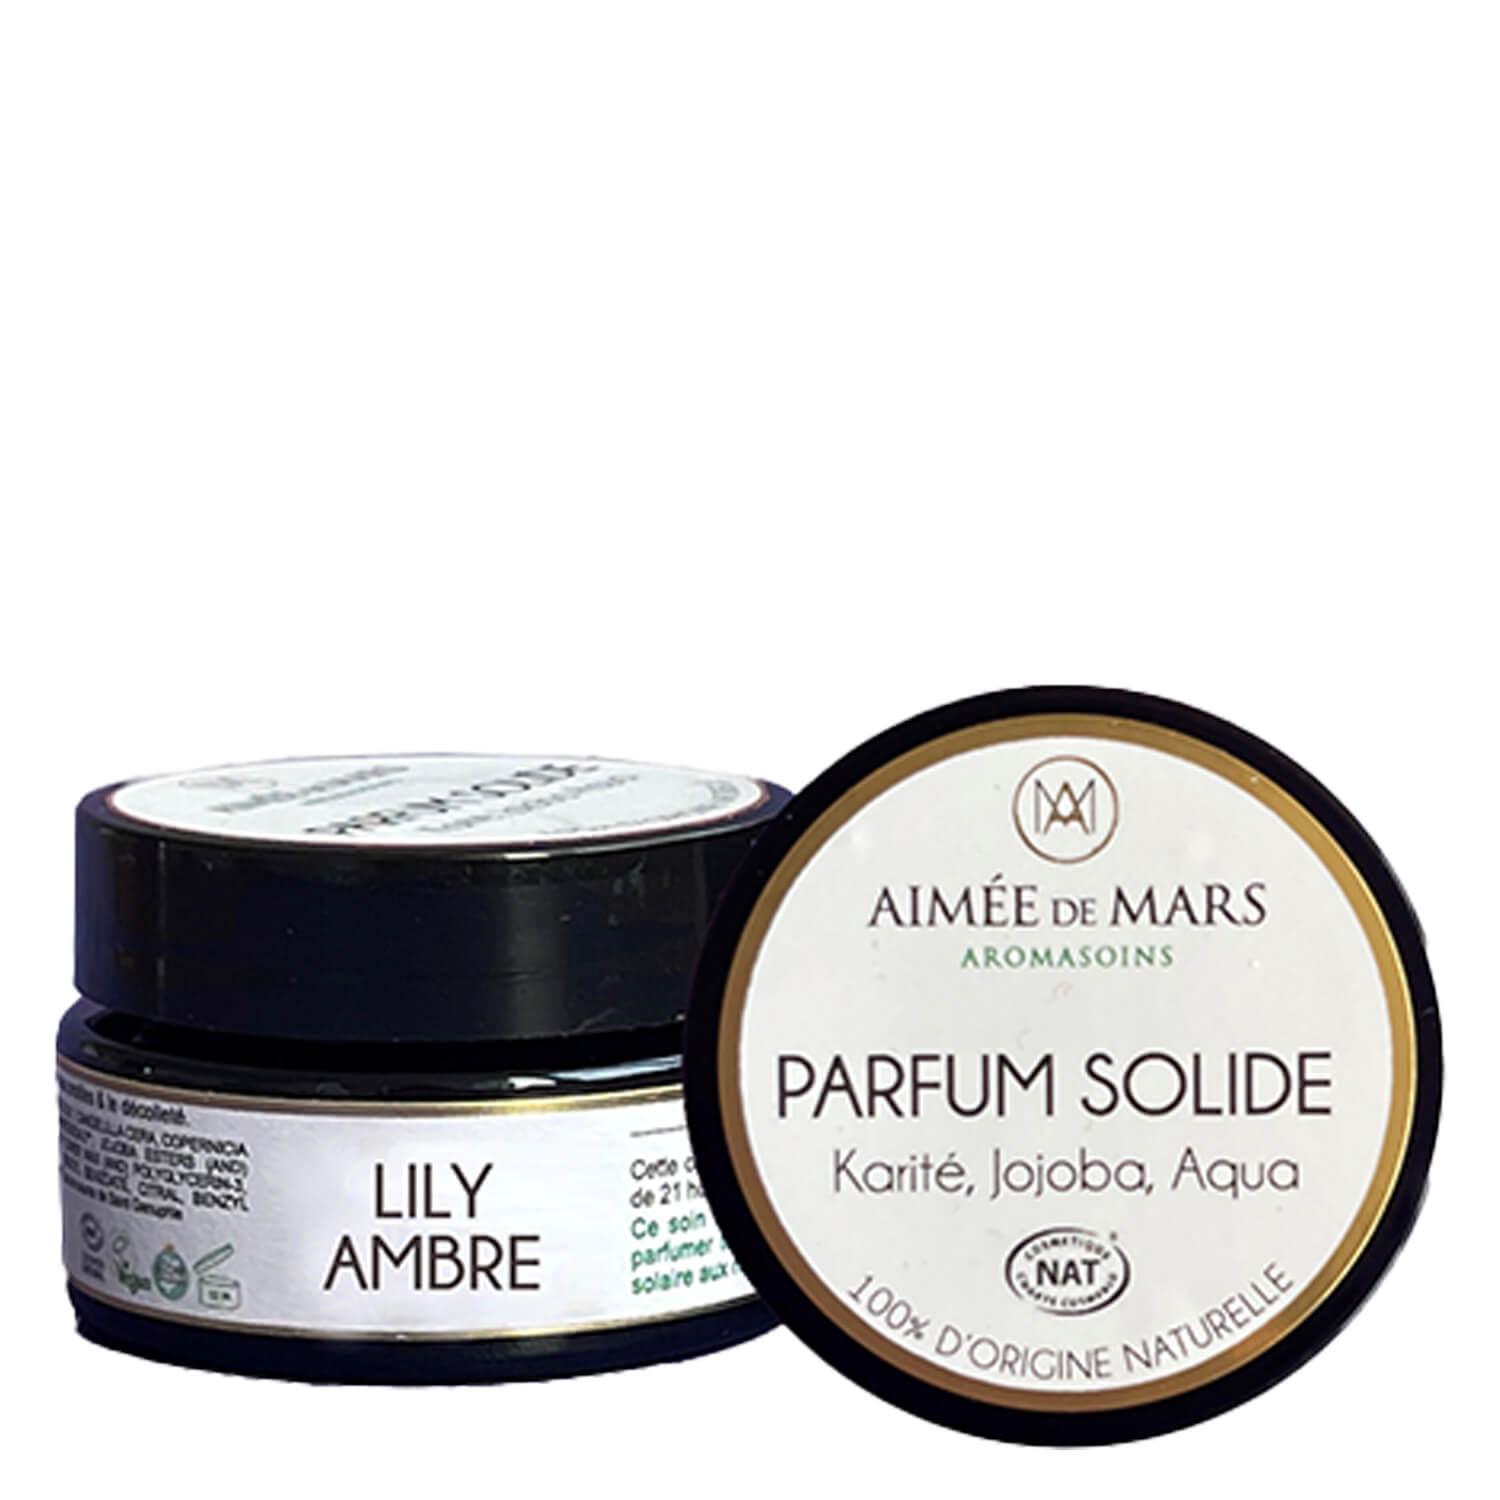 Aimée de Mars - Parfum Solid Lily Ambre